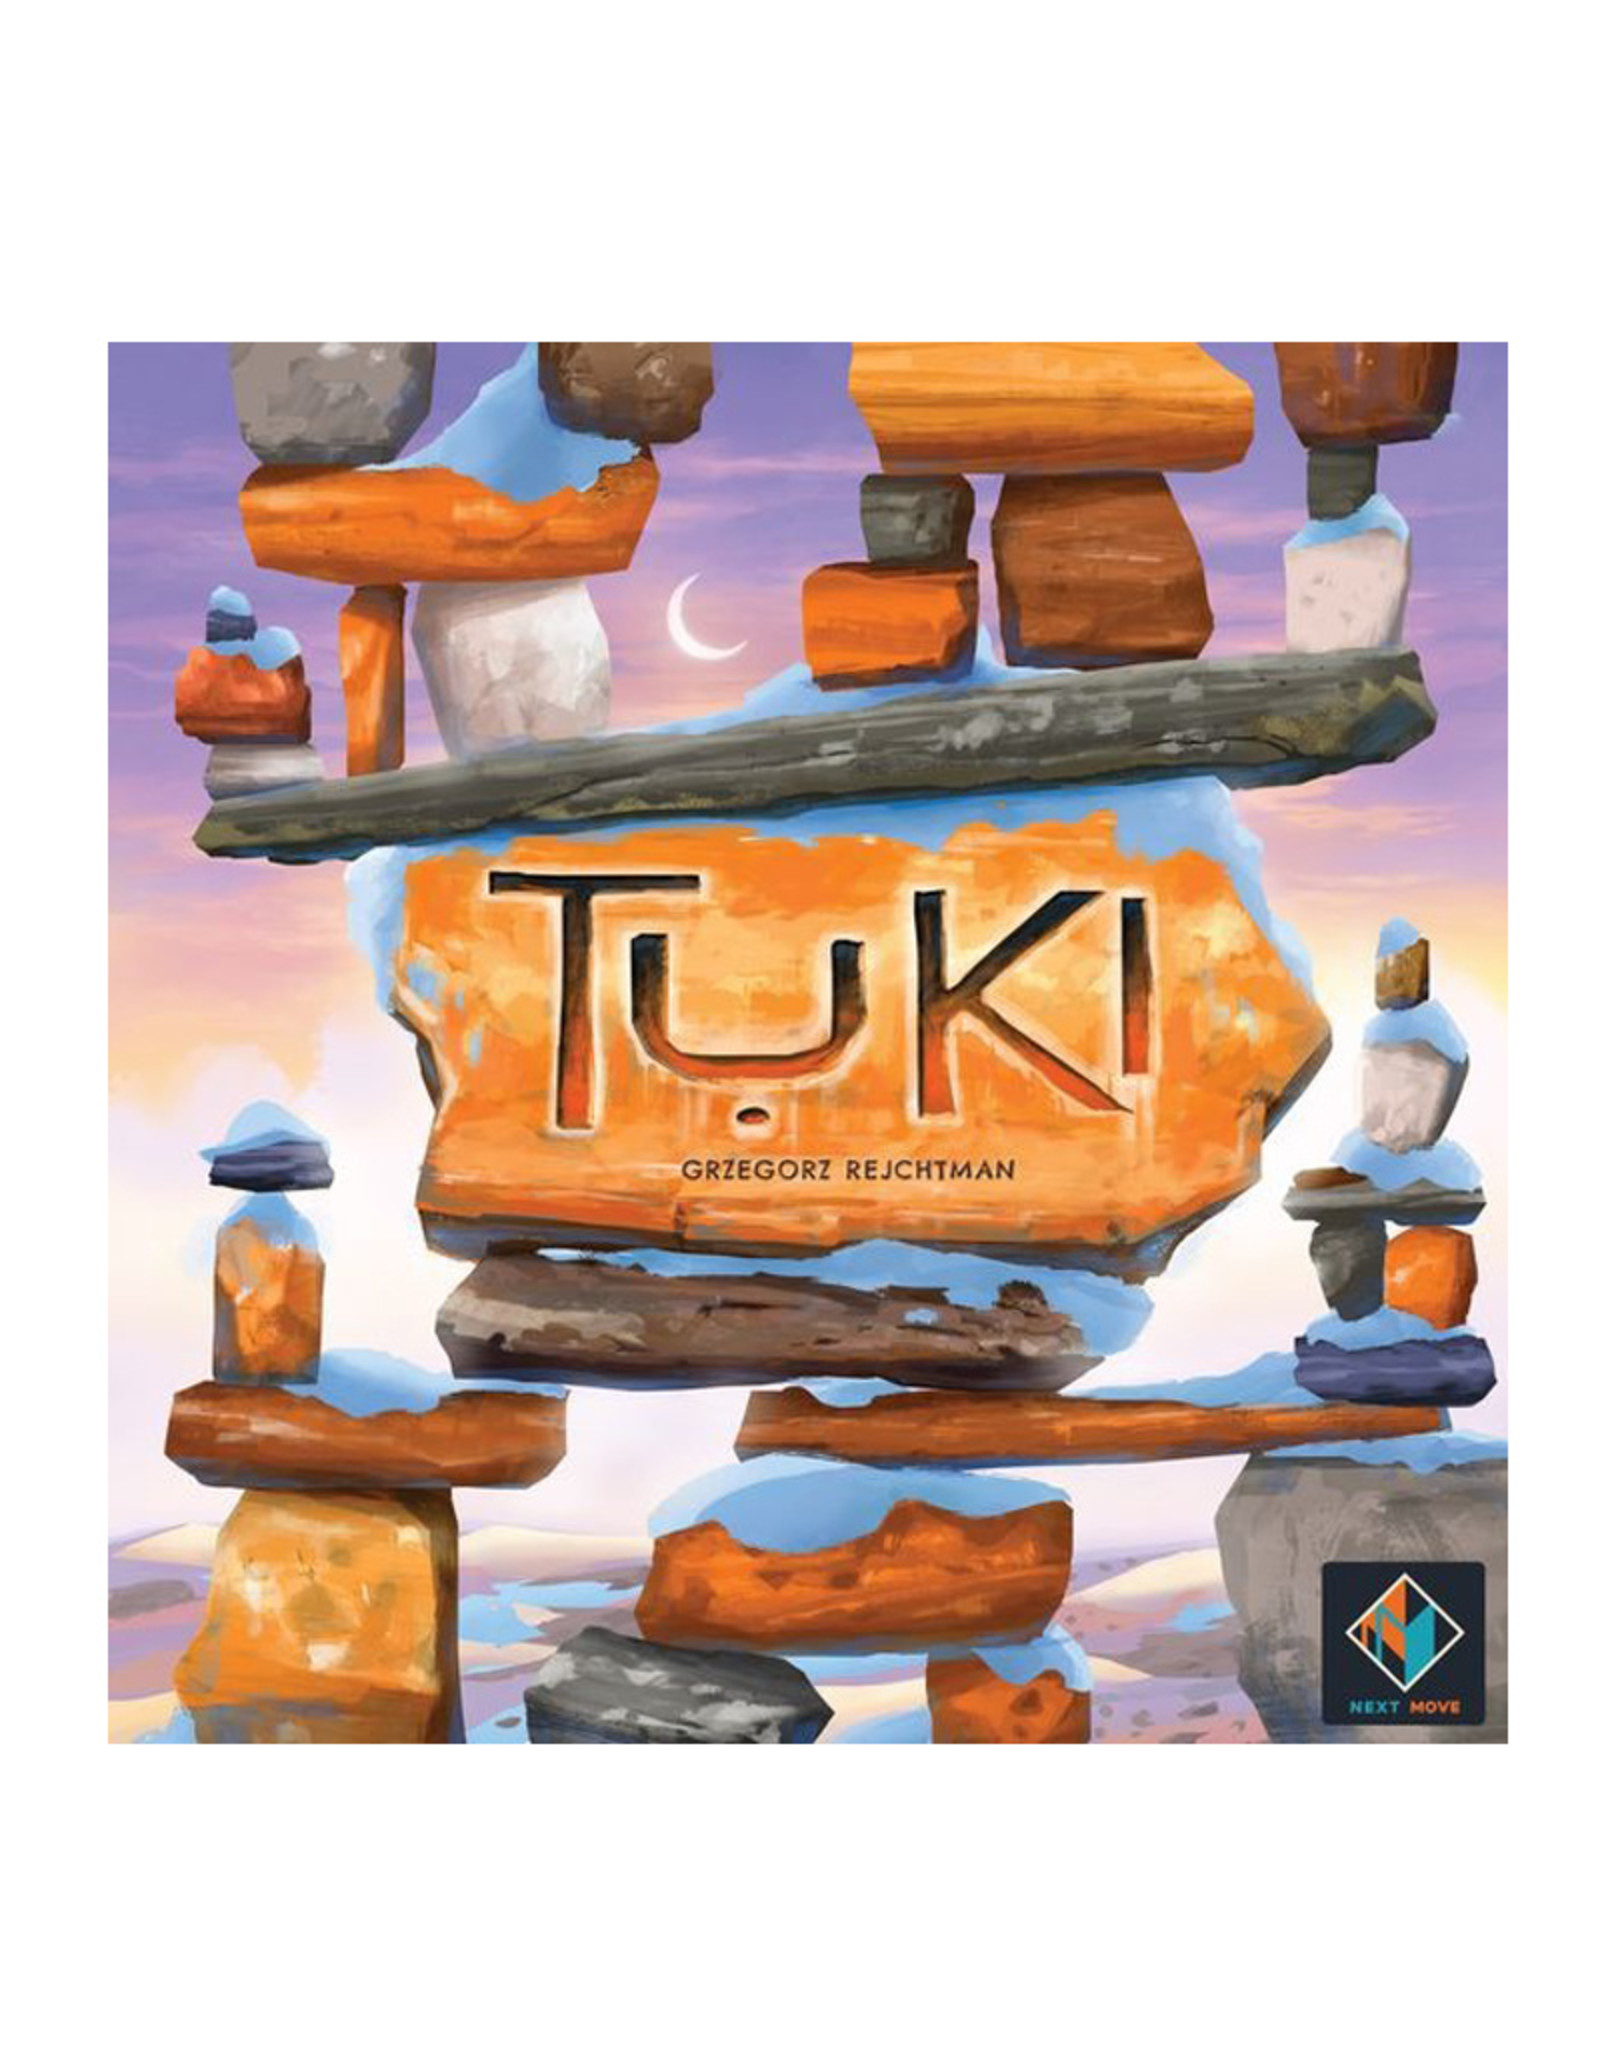 Next Move Games Tuki